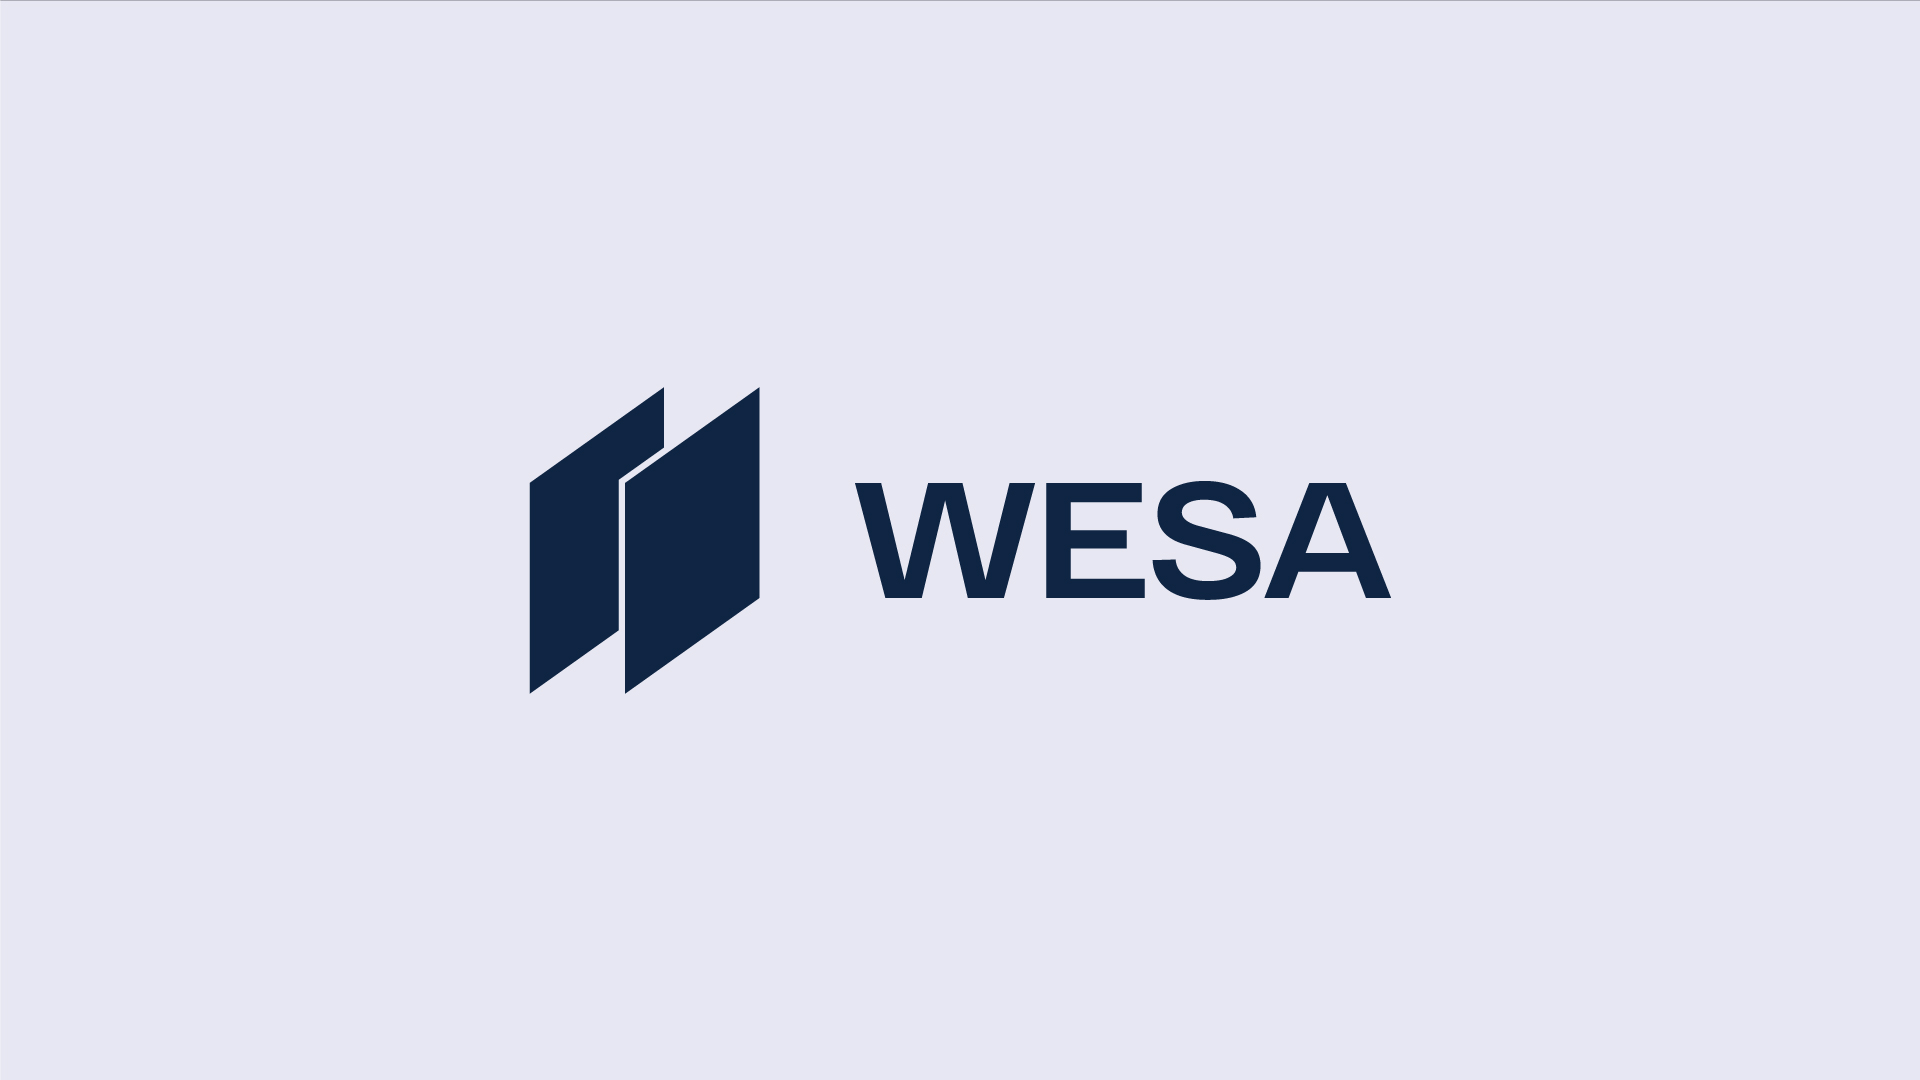 WESA Construction Brand Identity By M2plus Studio